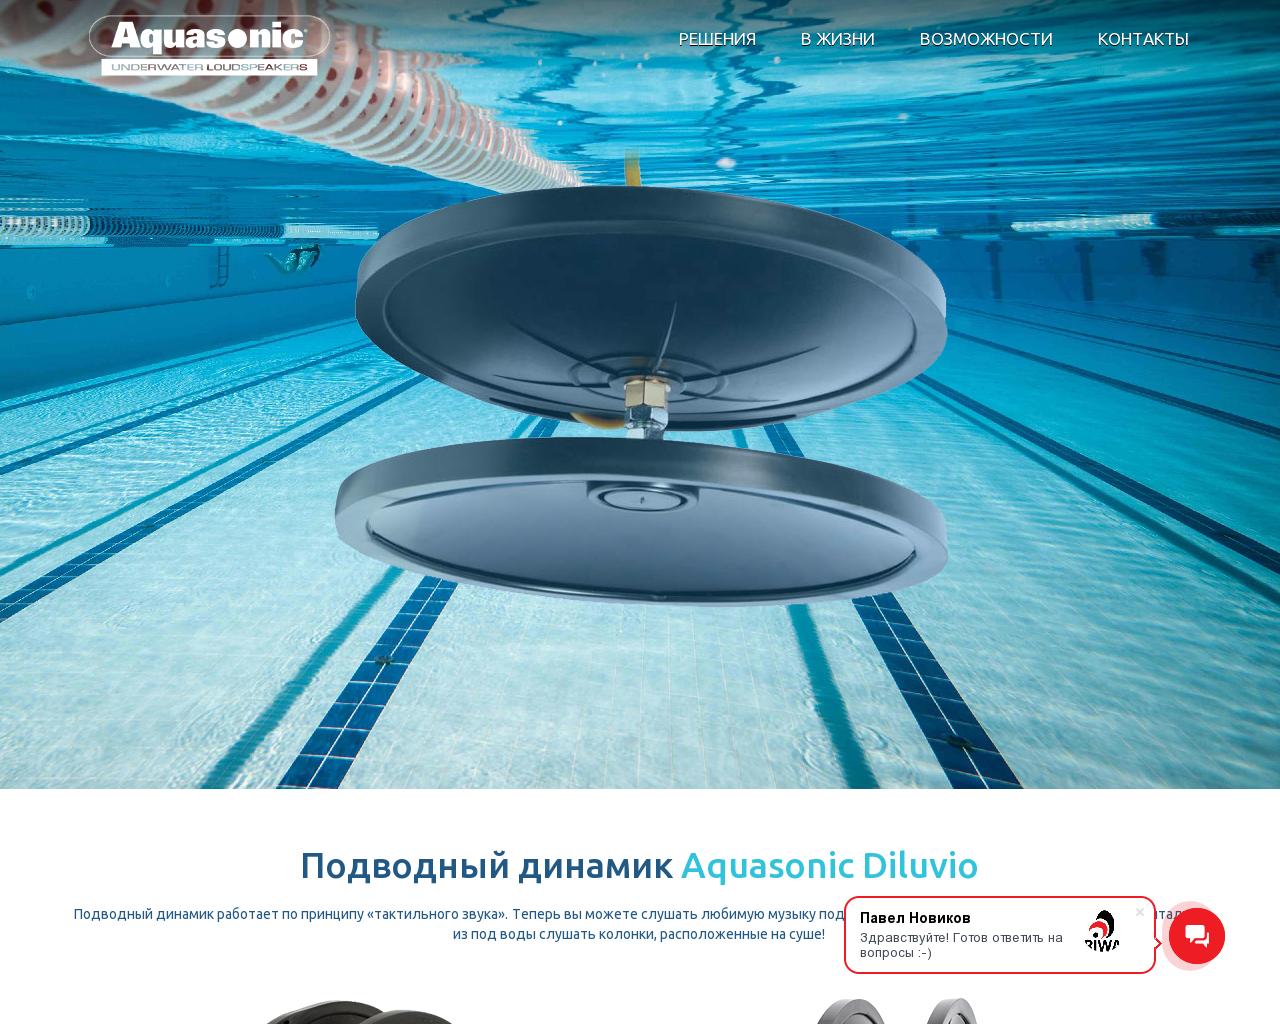 Изображение сайта aquasonic.ru в разрешении 1280x1024